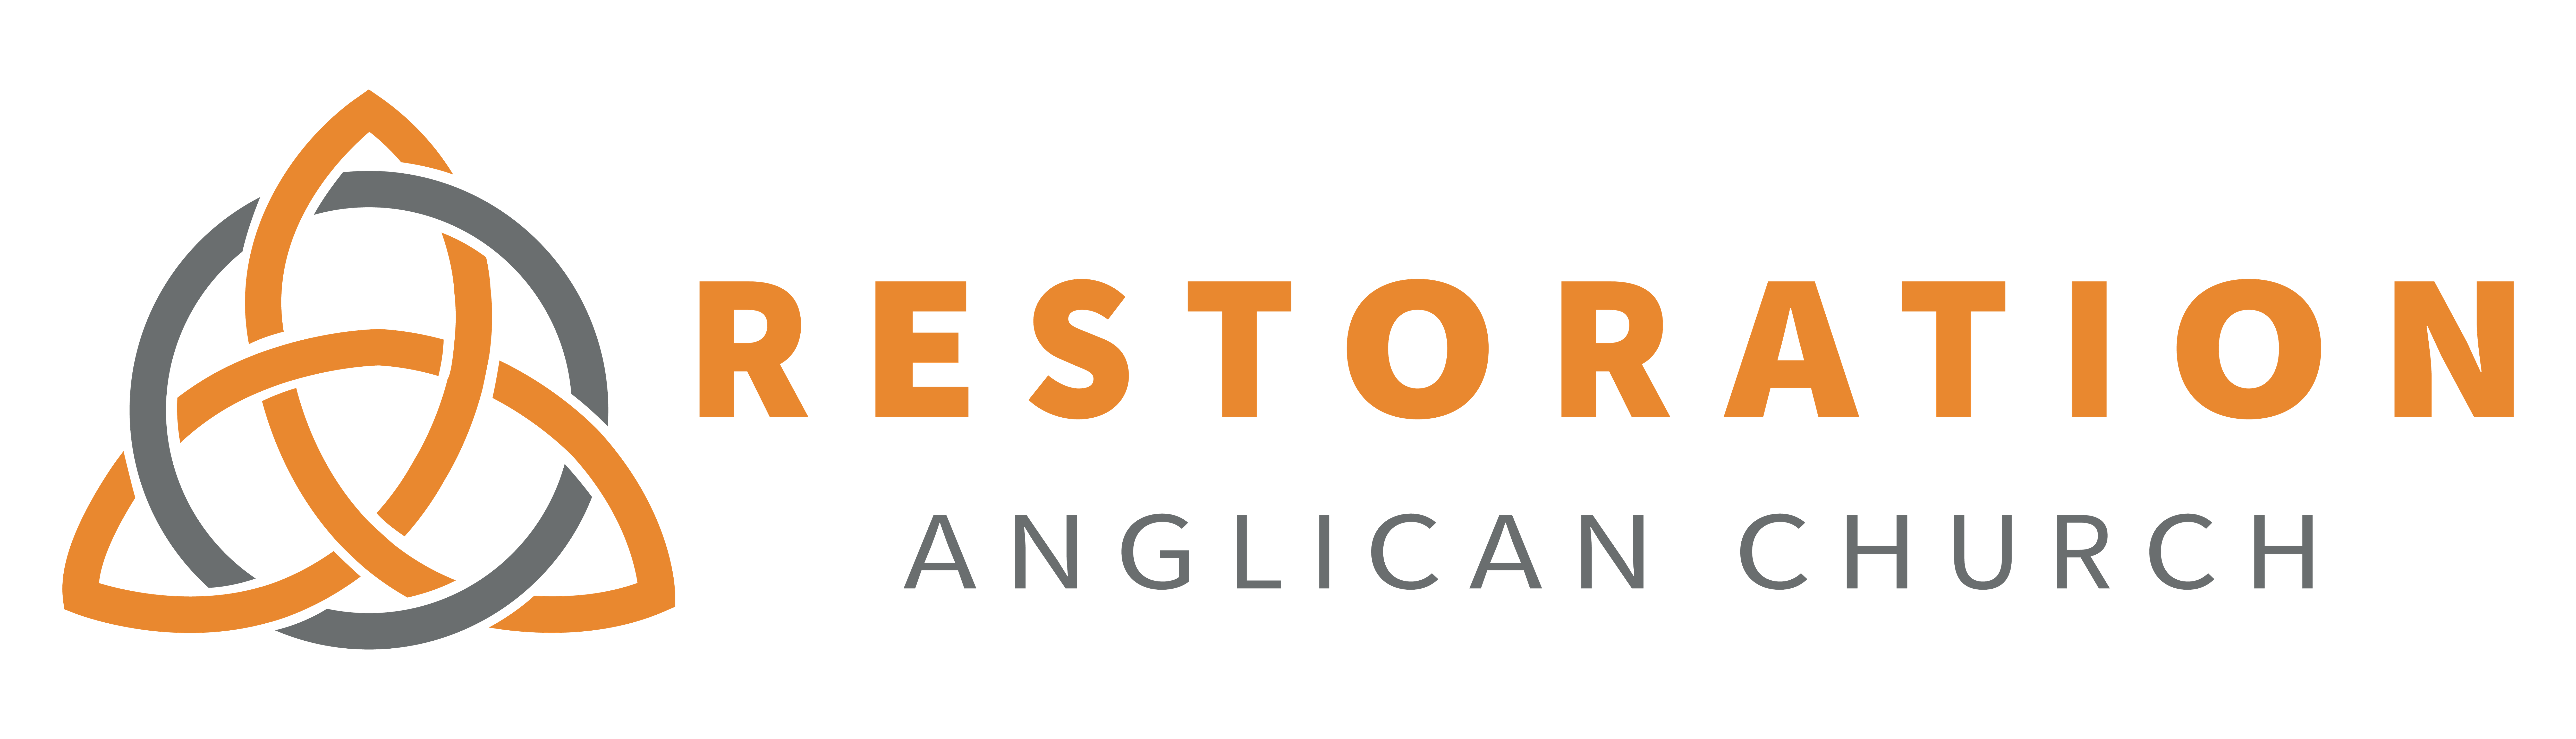 Restoration Anglican Church